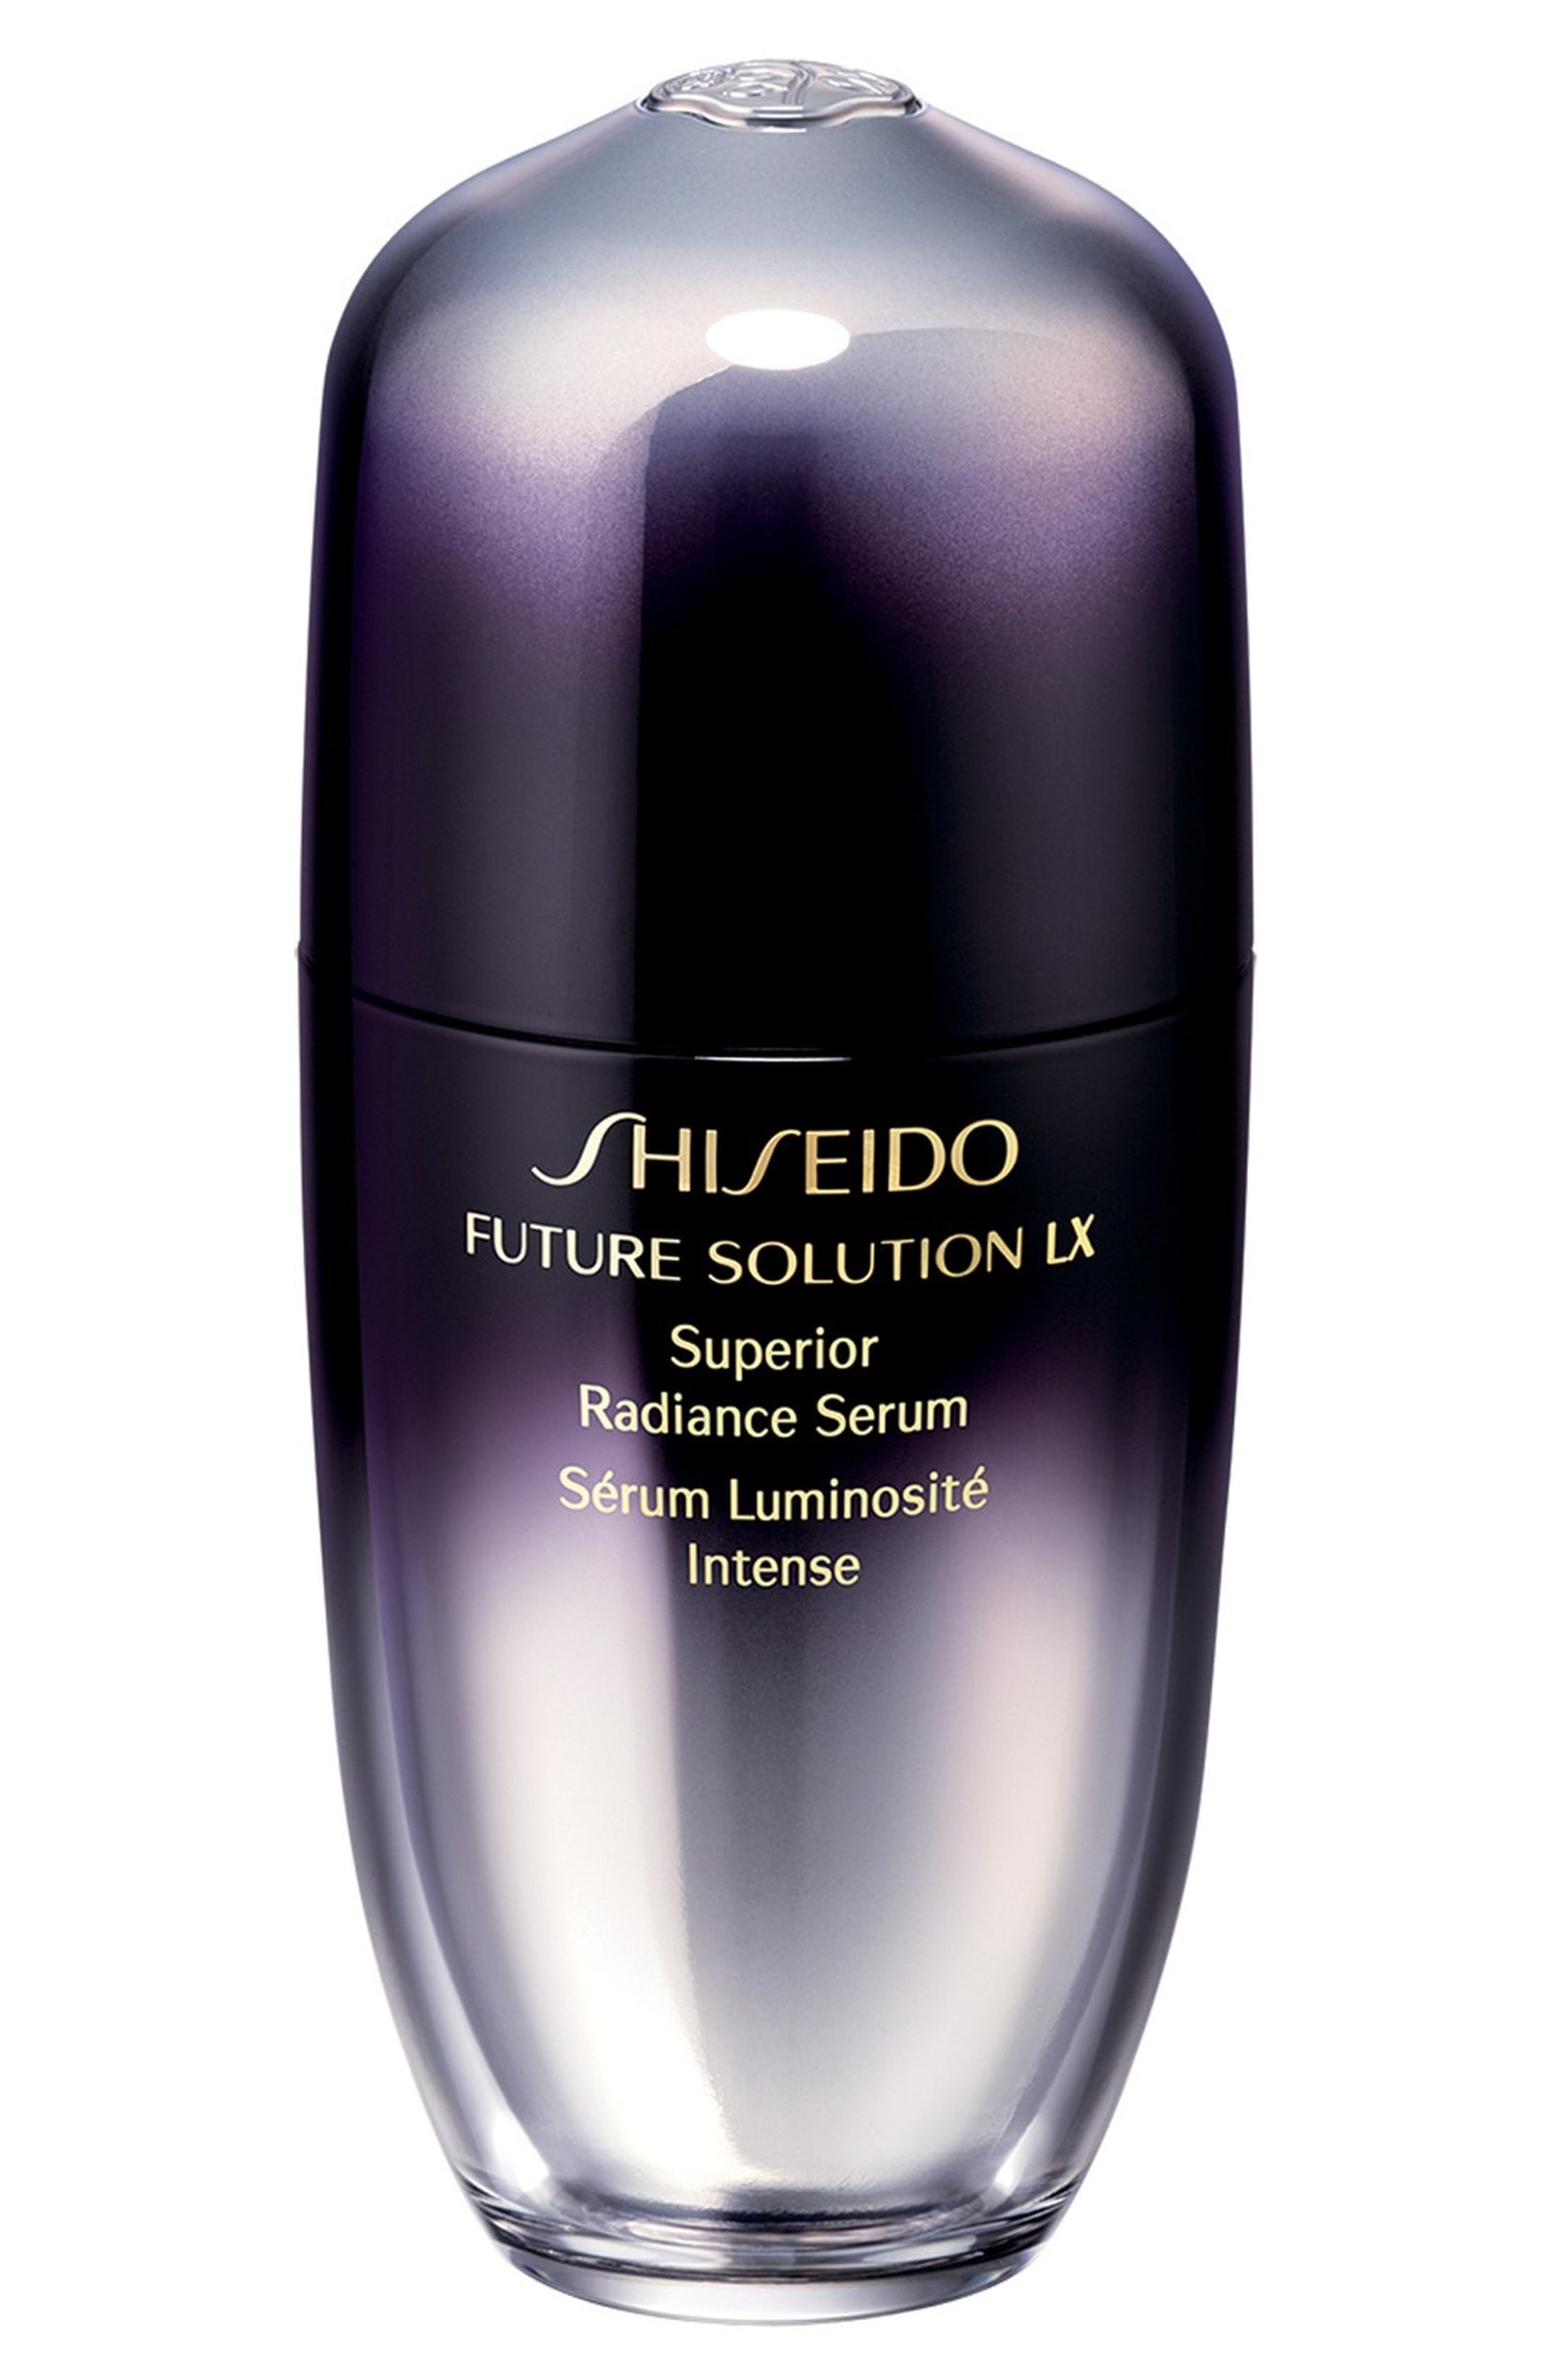 Shiseido solution lx. Shiseido Future solution LX Serum. Shiseido Future solution LX Intensive. Shiseido cыворотка для здорового сияния кожи Legendary Enmei Future solution LX. Shiseido Future solution LX оттенки.